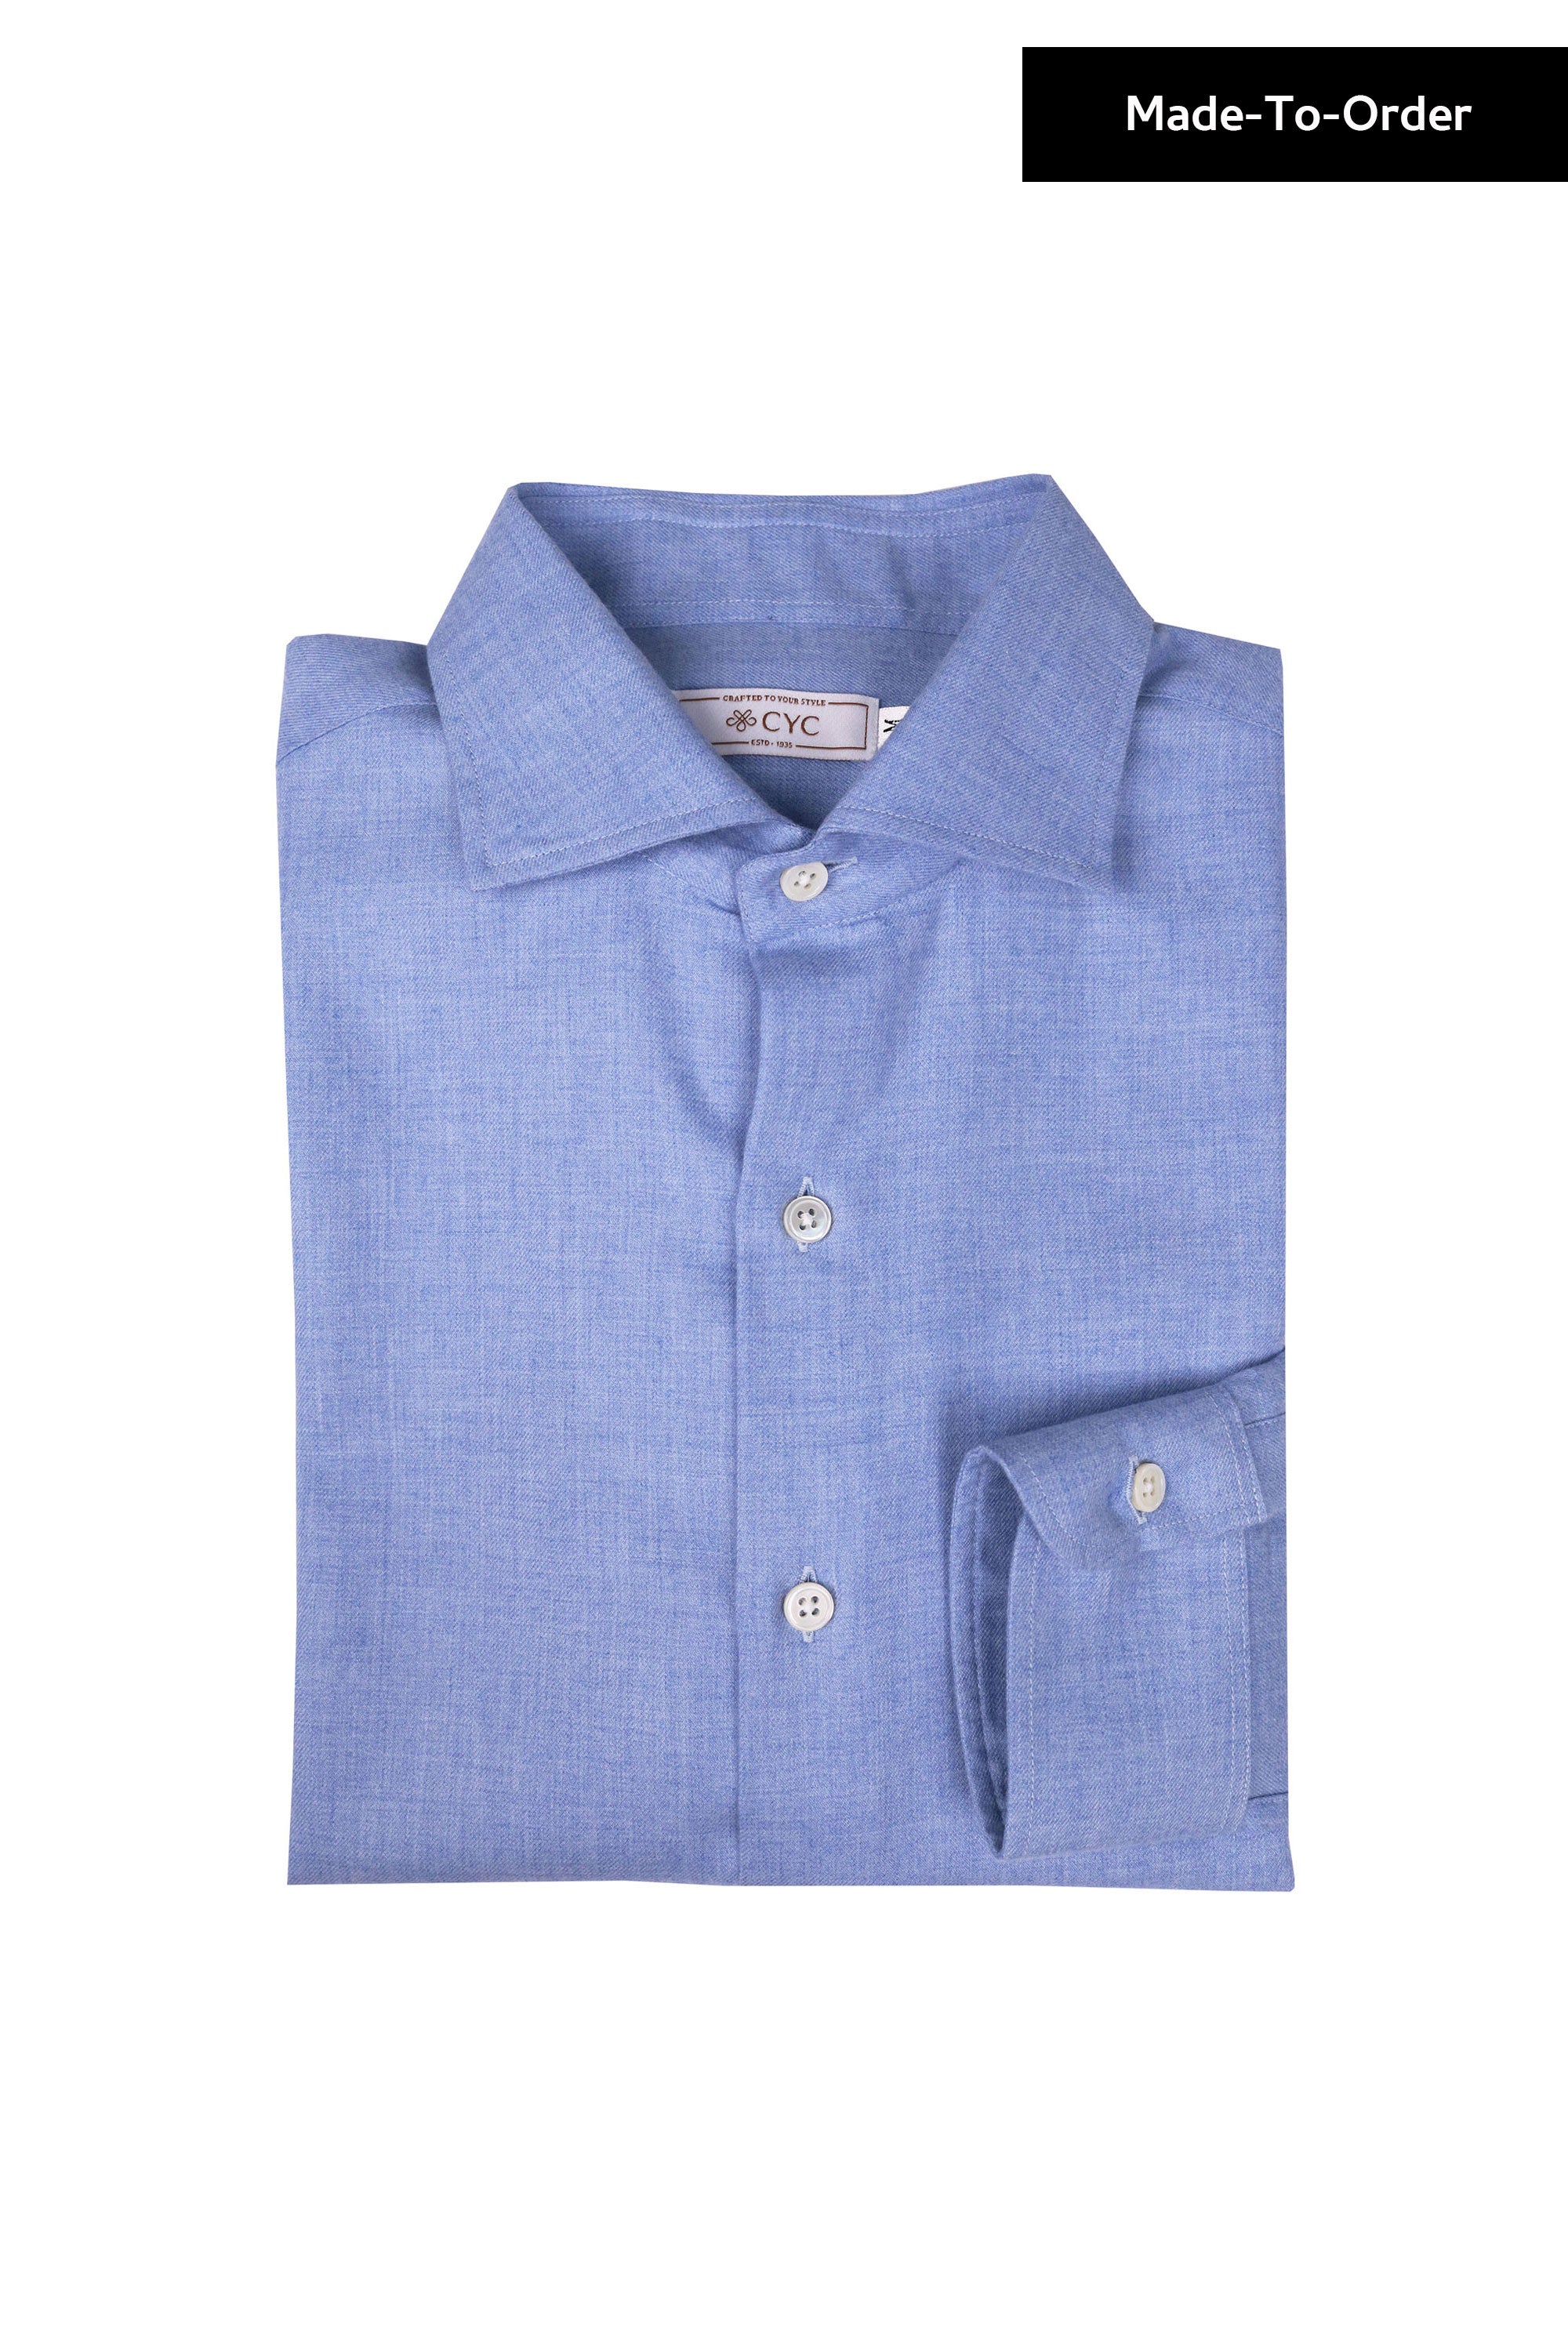 Alumo Blue Cashmerello Long Sleeve Business Shirt